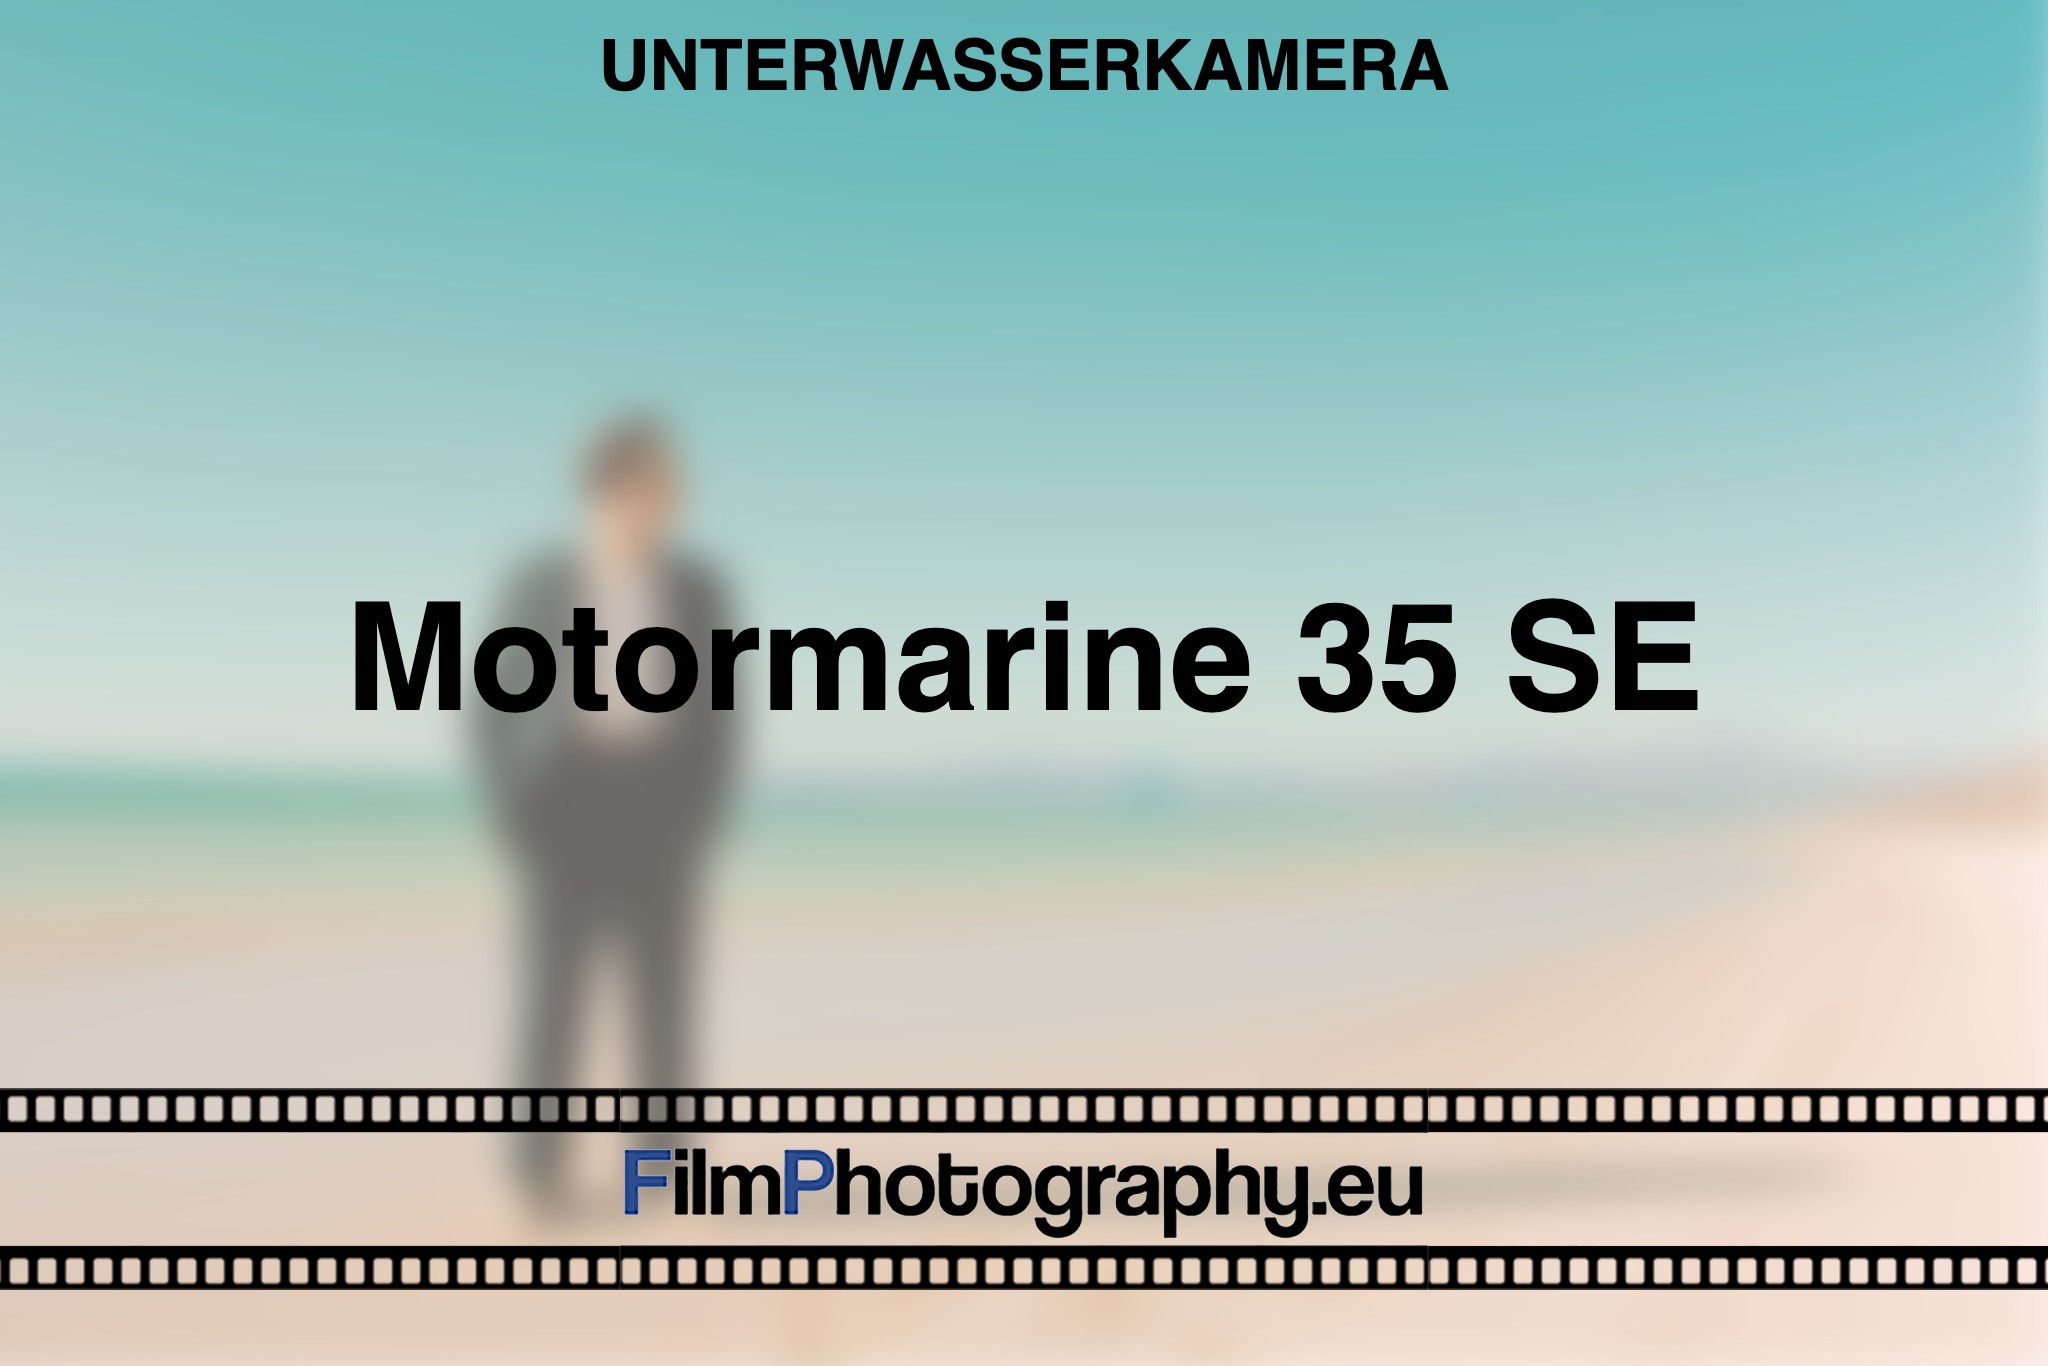 motormarine-35-se-unterwasserkamera-bnv